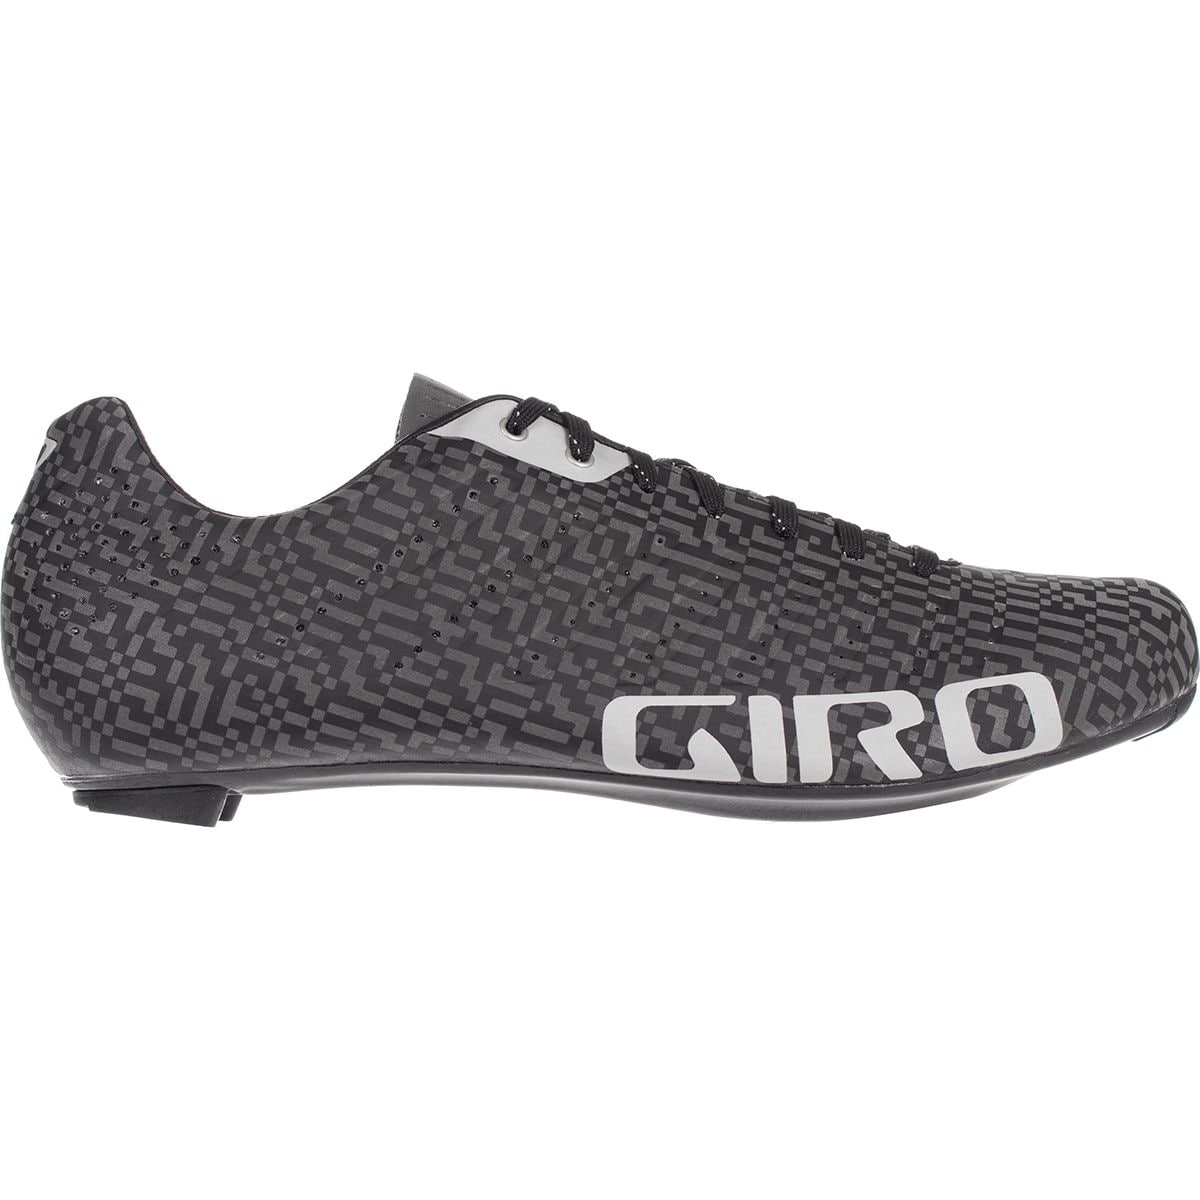 Giro Empire SLX Reflective Cycling Shoe - Men's